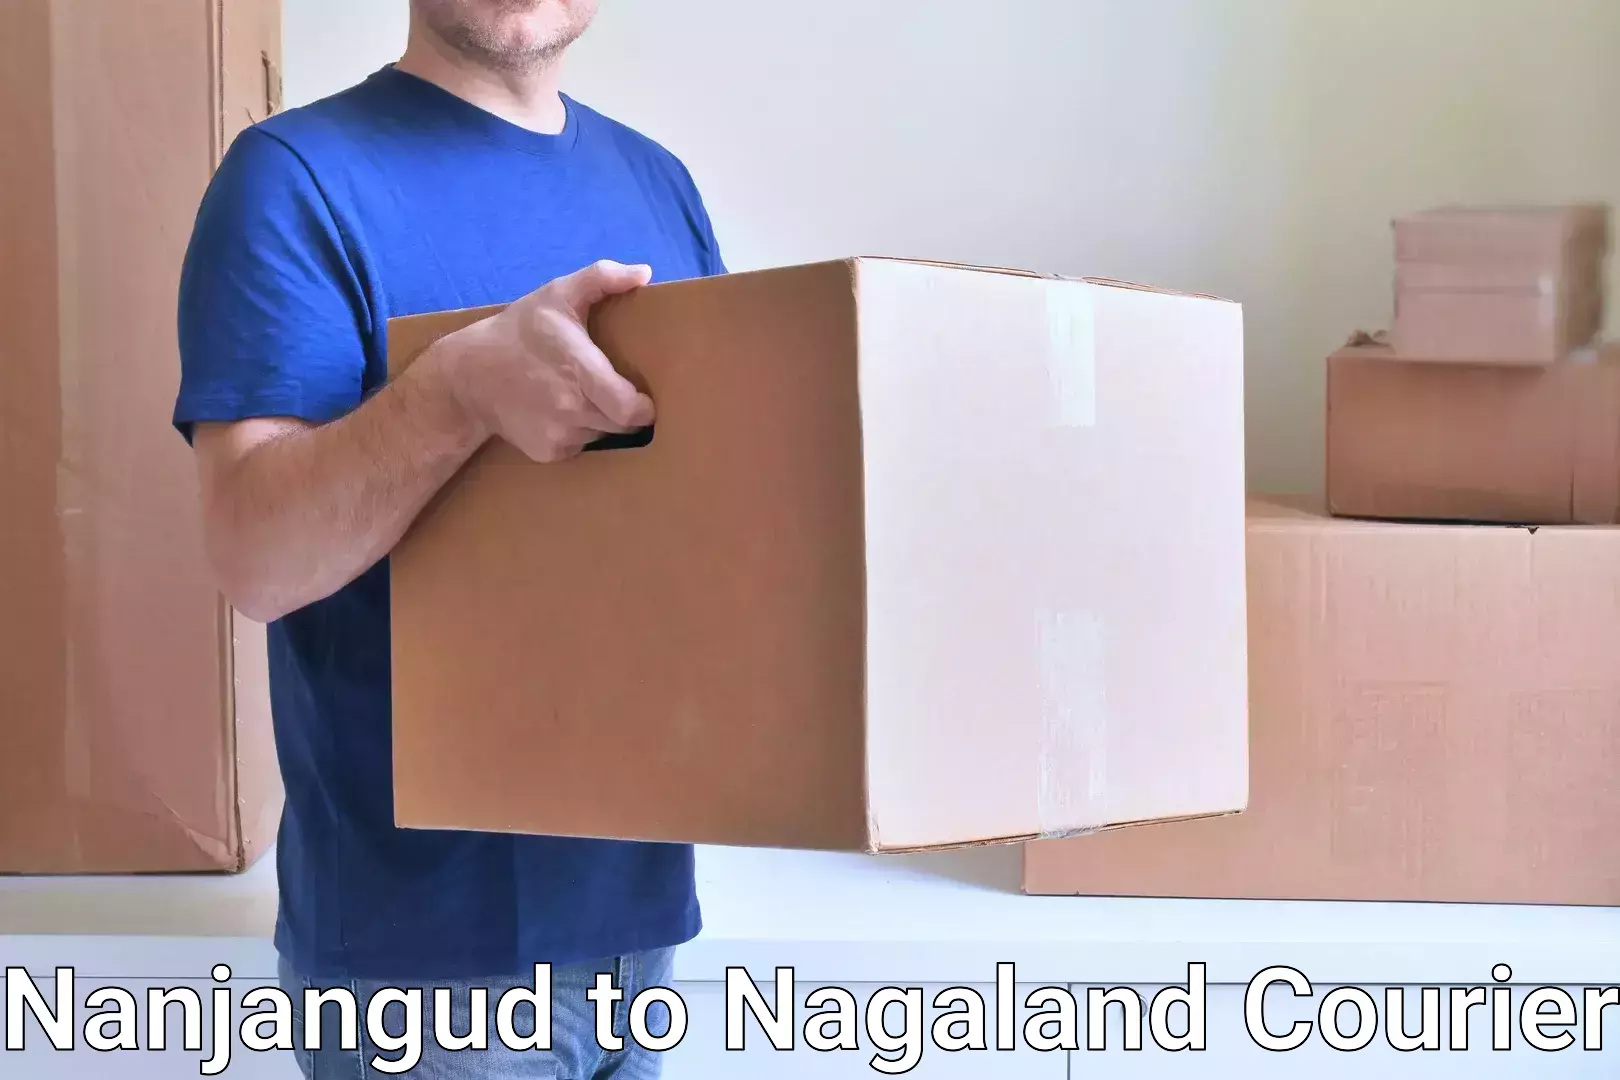 User-friendly courier app Nanjangud to Nagaland